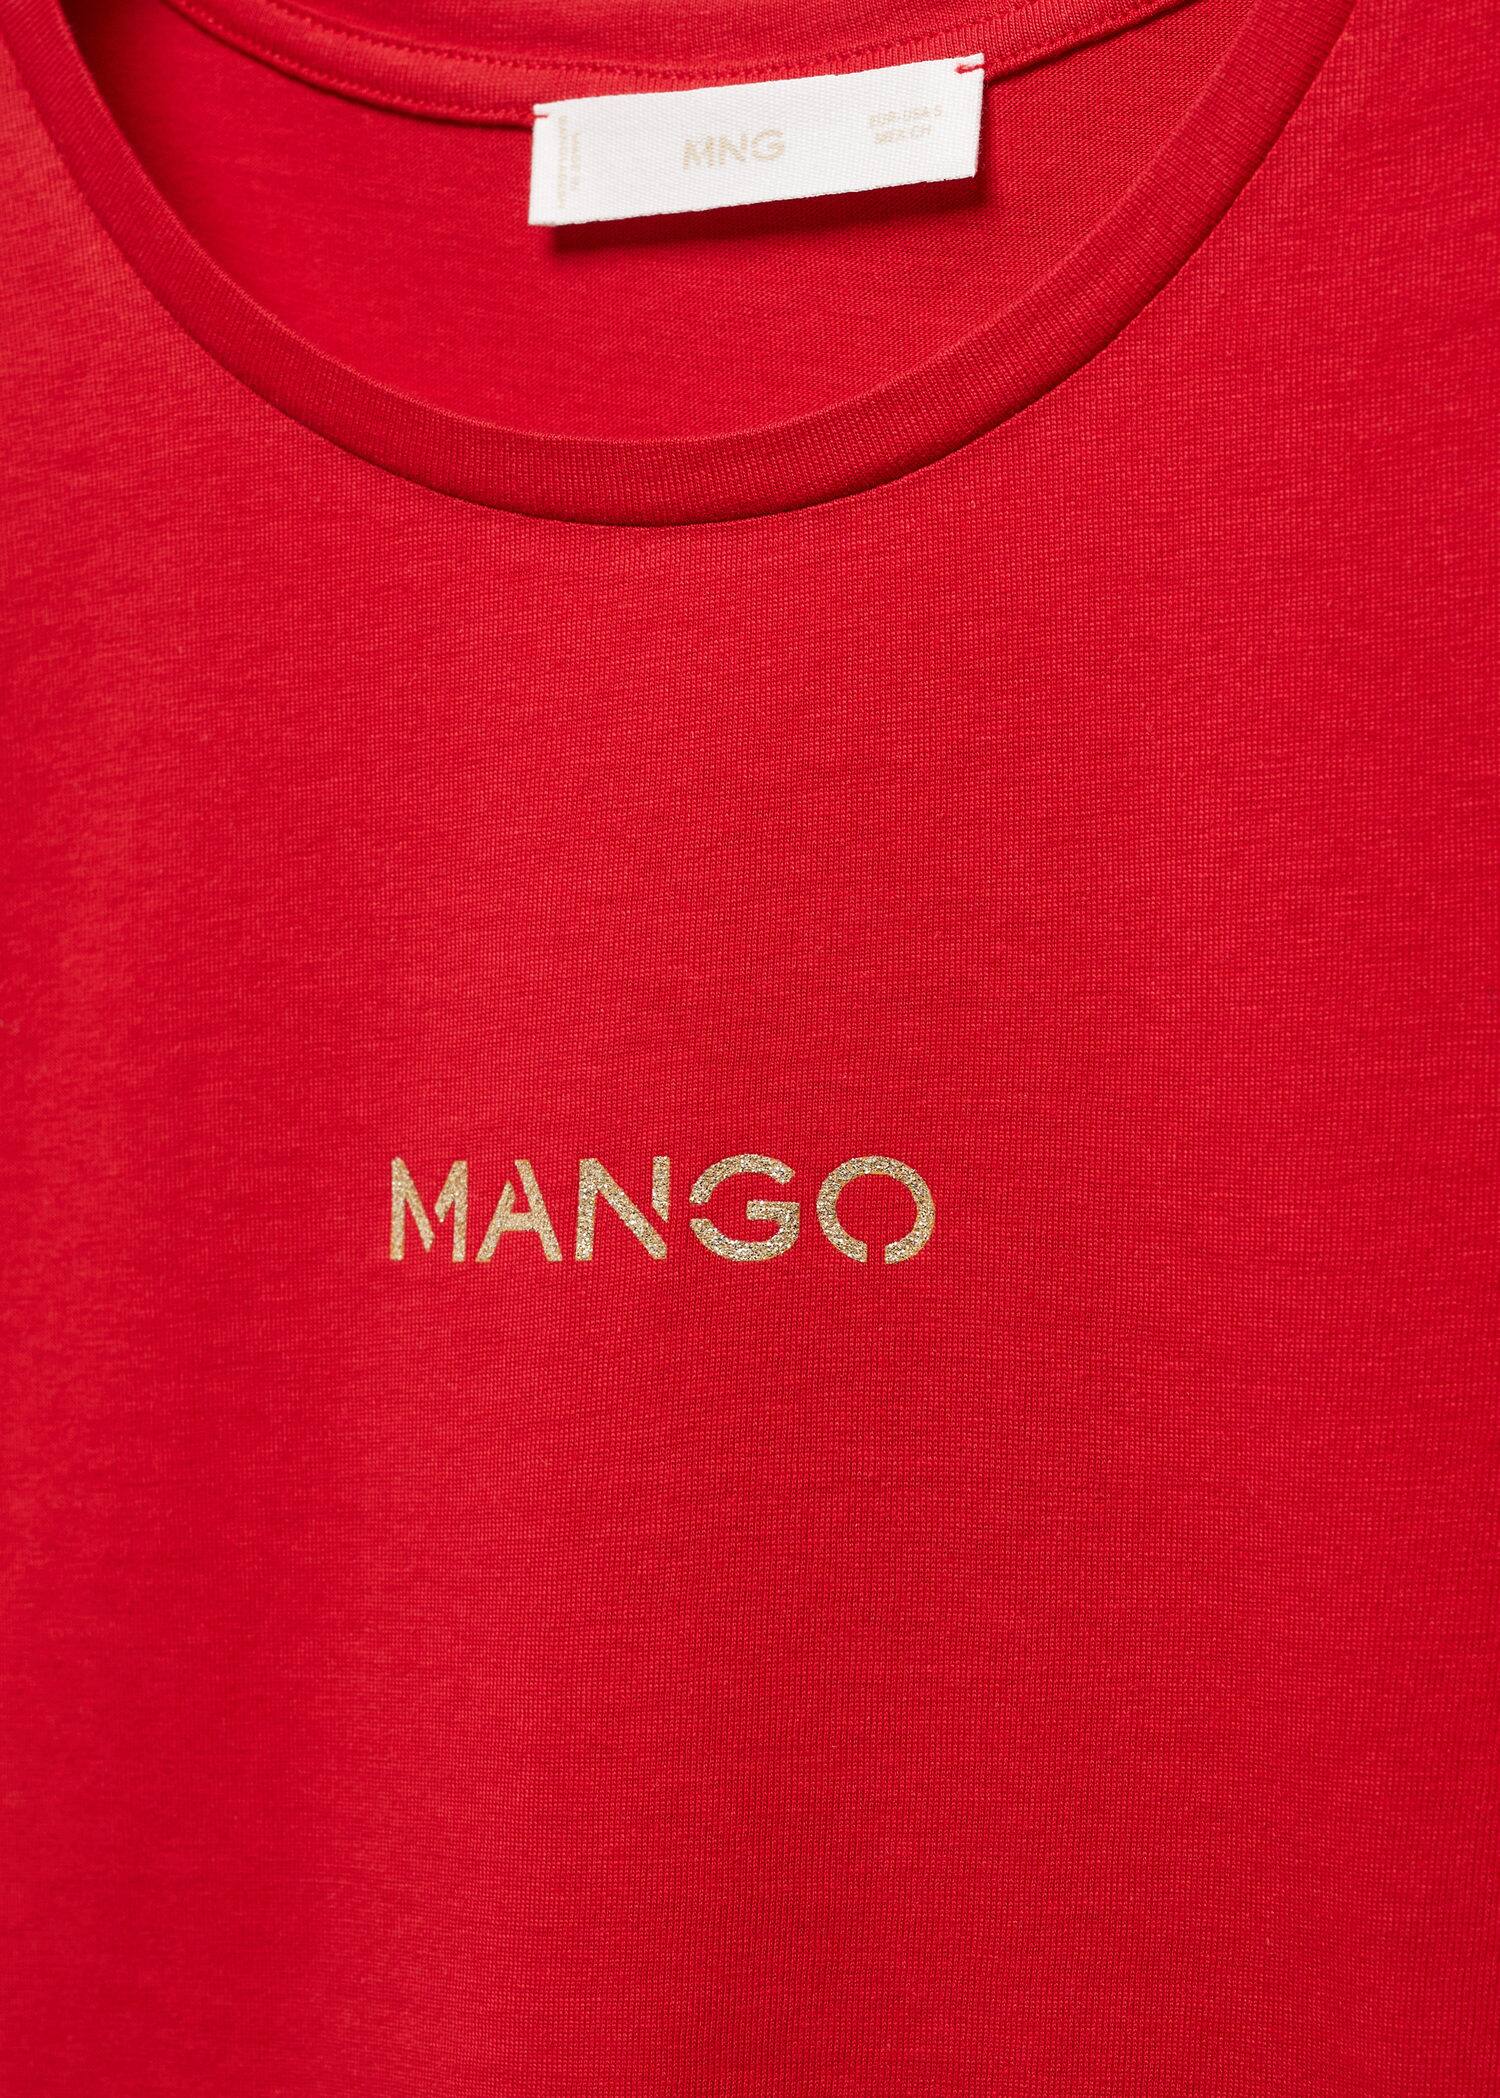 MANGO MANGOLOG-H 67010426-70 MANGO WOMEN T-SHIRT SHORT SLEEVE